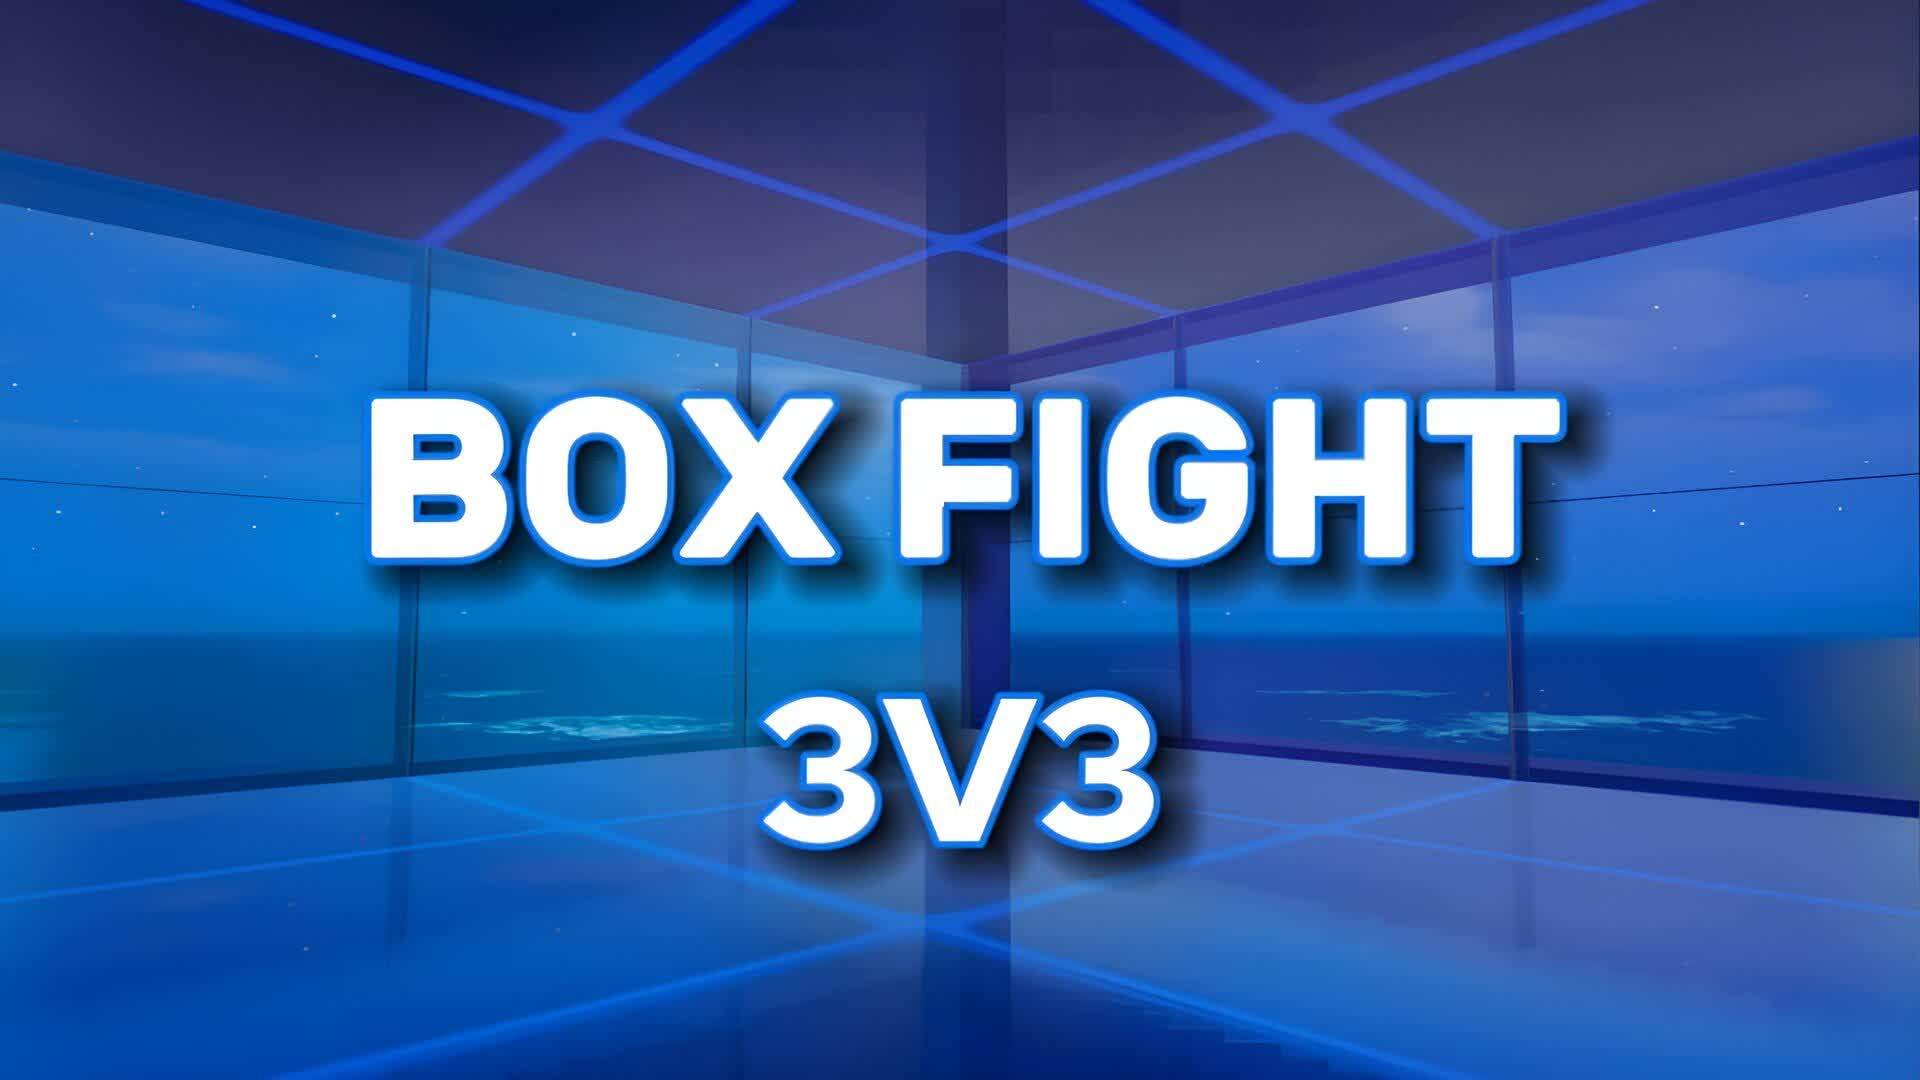 BOX FIGHT 3v3